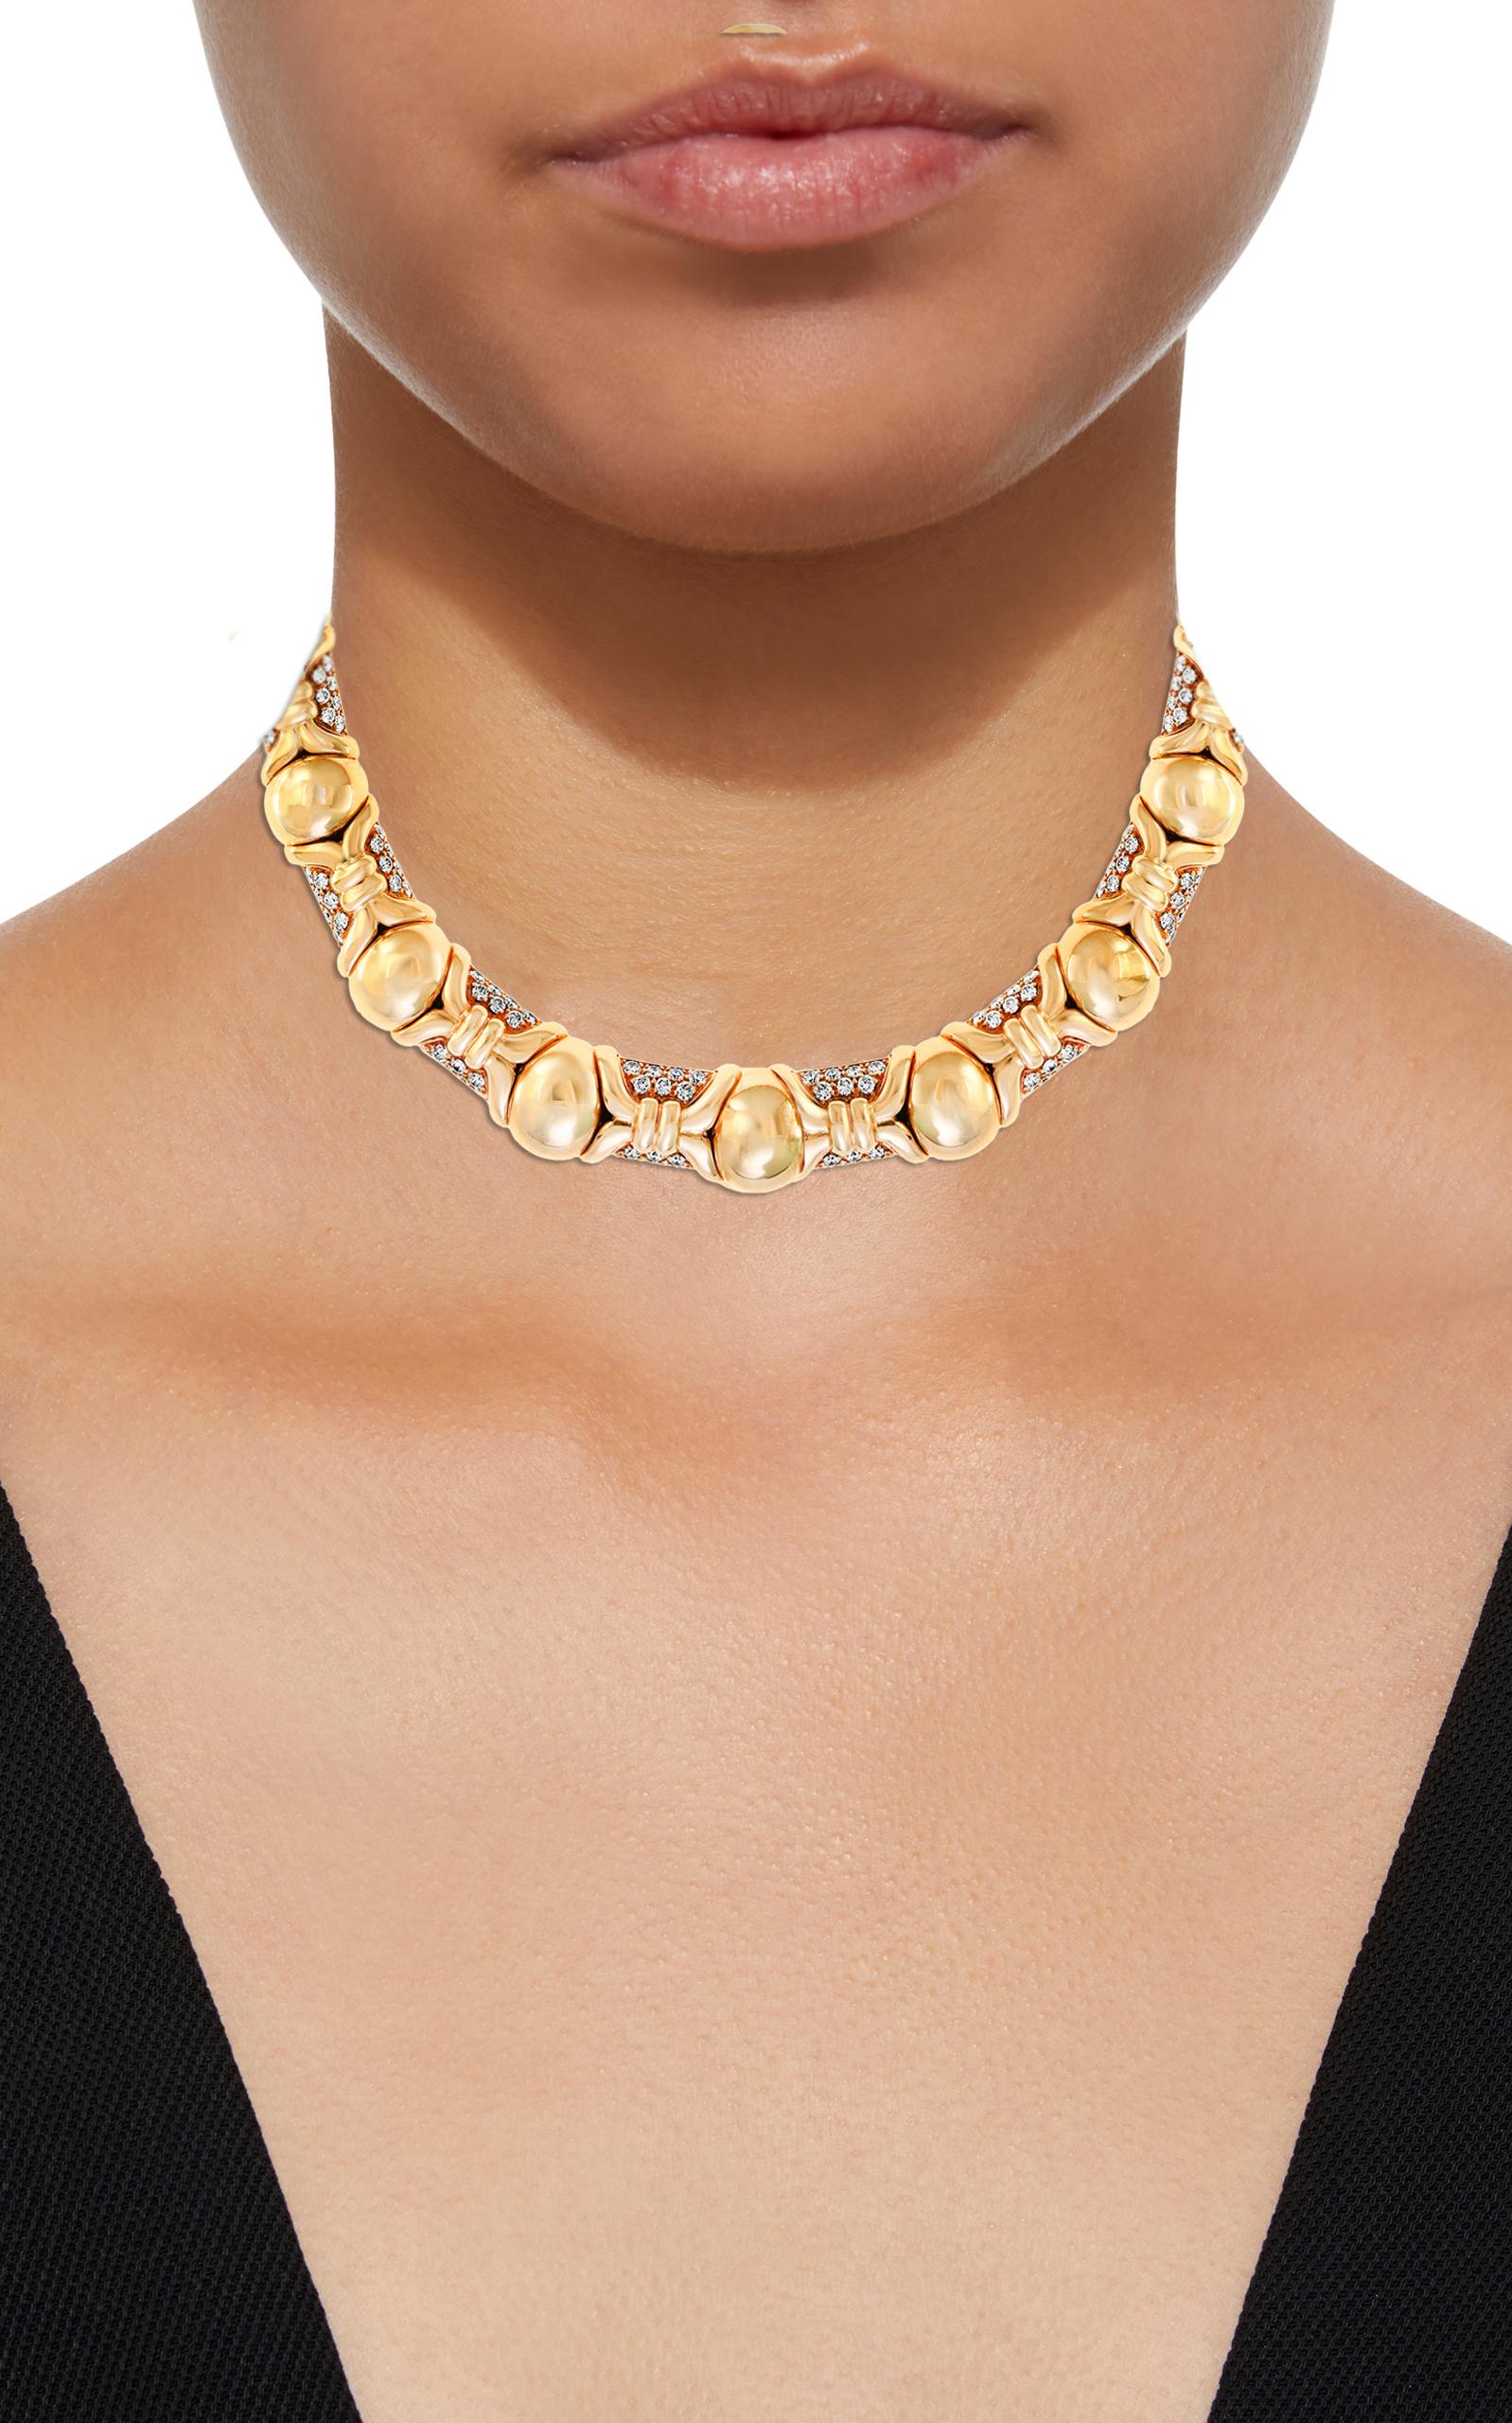 Bulgari Suite Necklace and Earrings in 18 Karat Gold and 12 Carat Diamonds 6